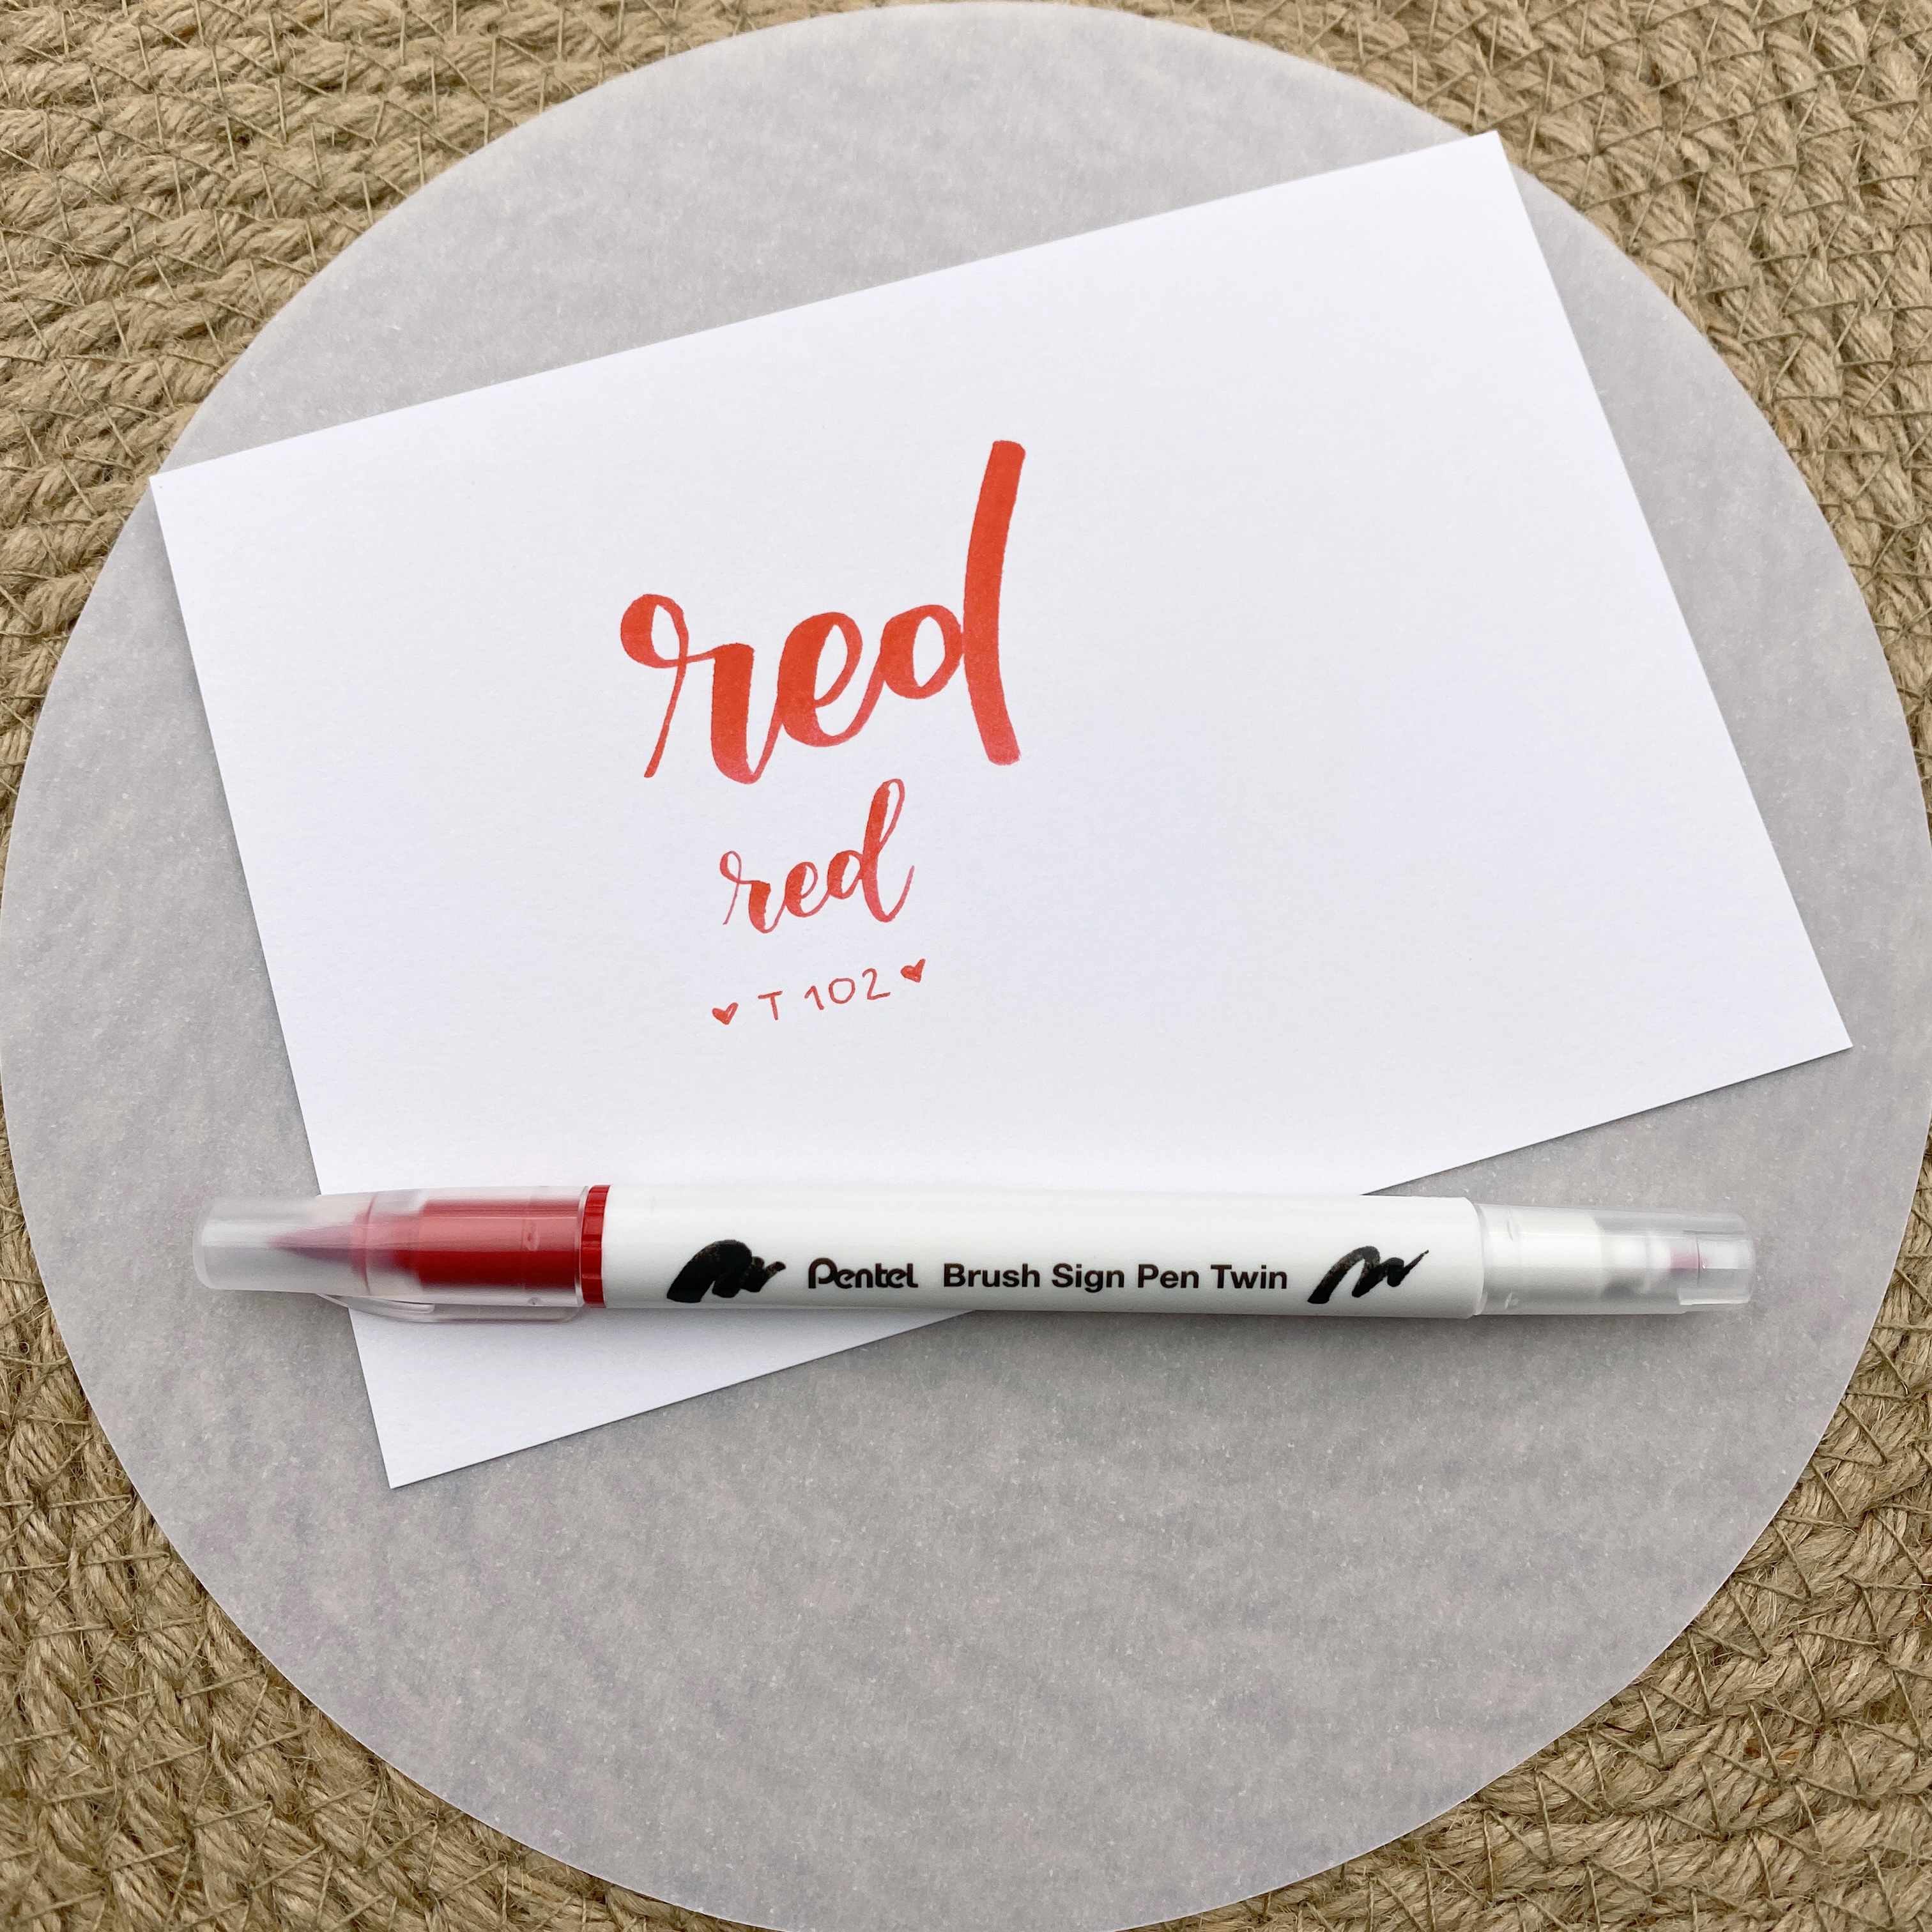 Pentel Brush Sign Pen Twin 102 Red